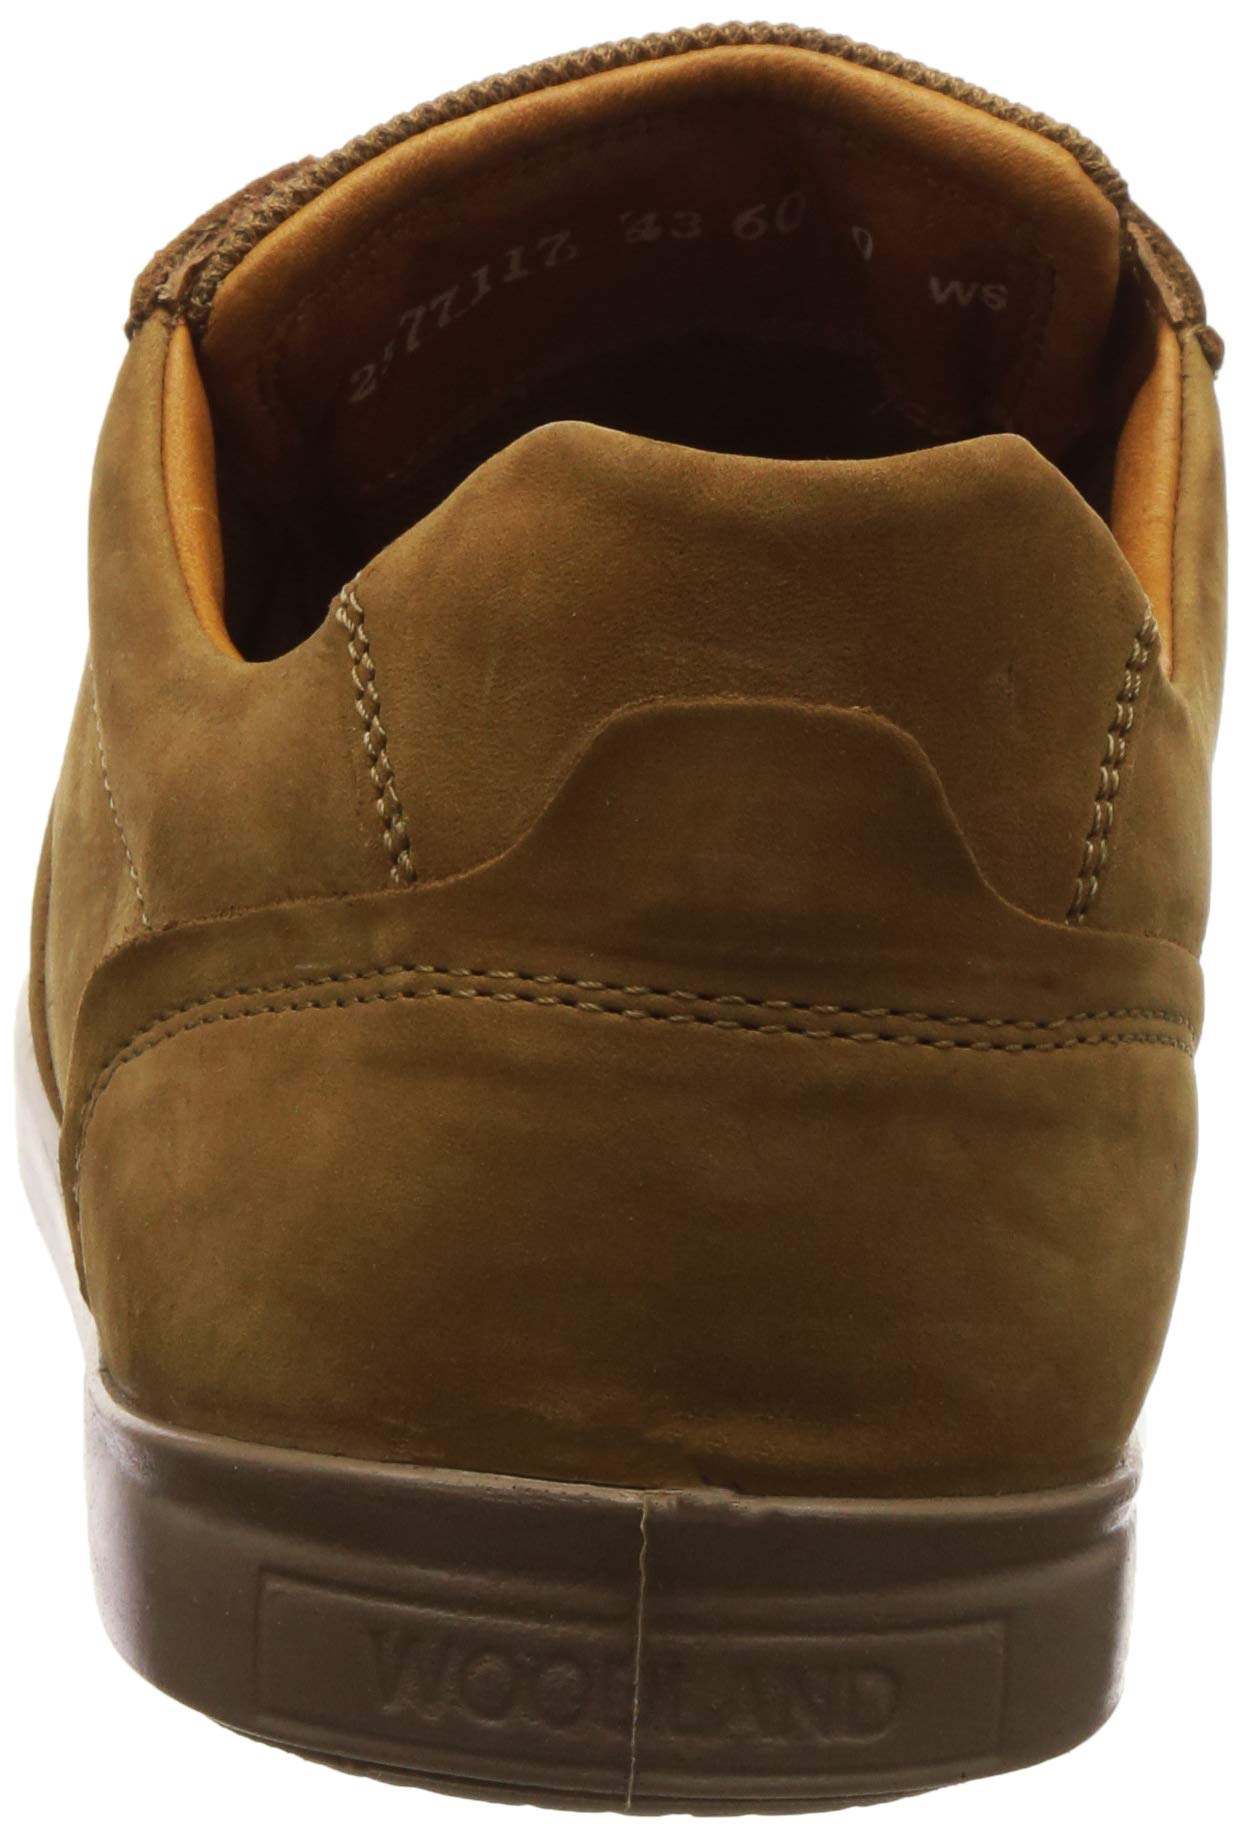 Woodland Mens Gc 2577117ws Camel Sneaker - 9 UK (43 EU) (Gc 2577117ws)